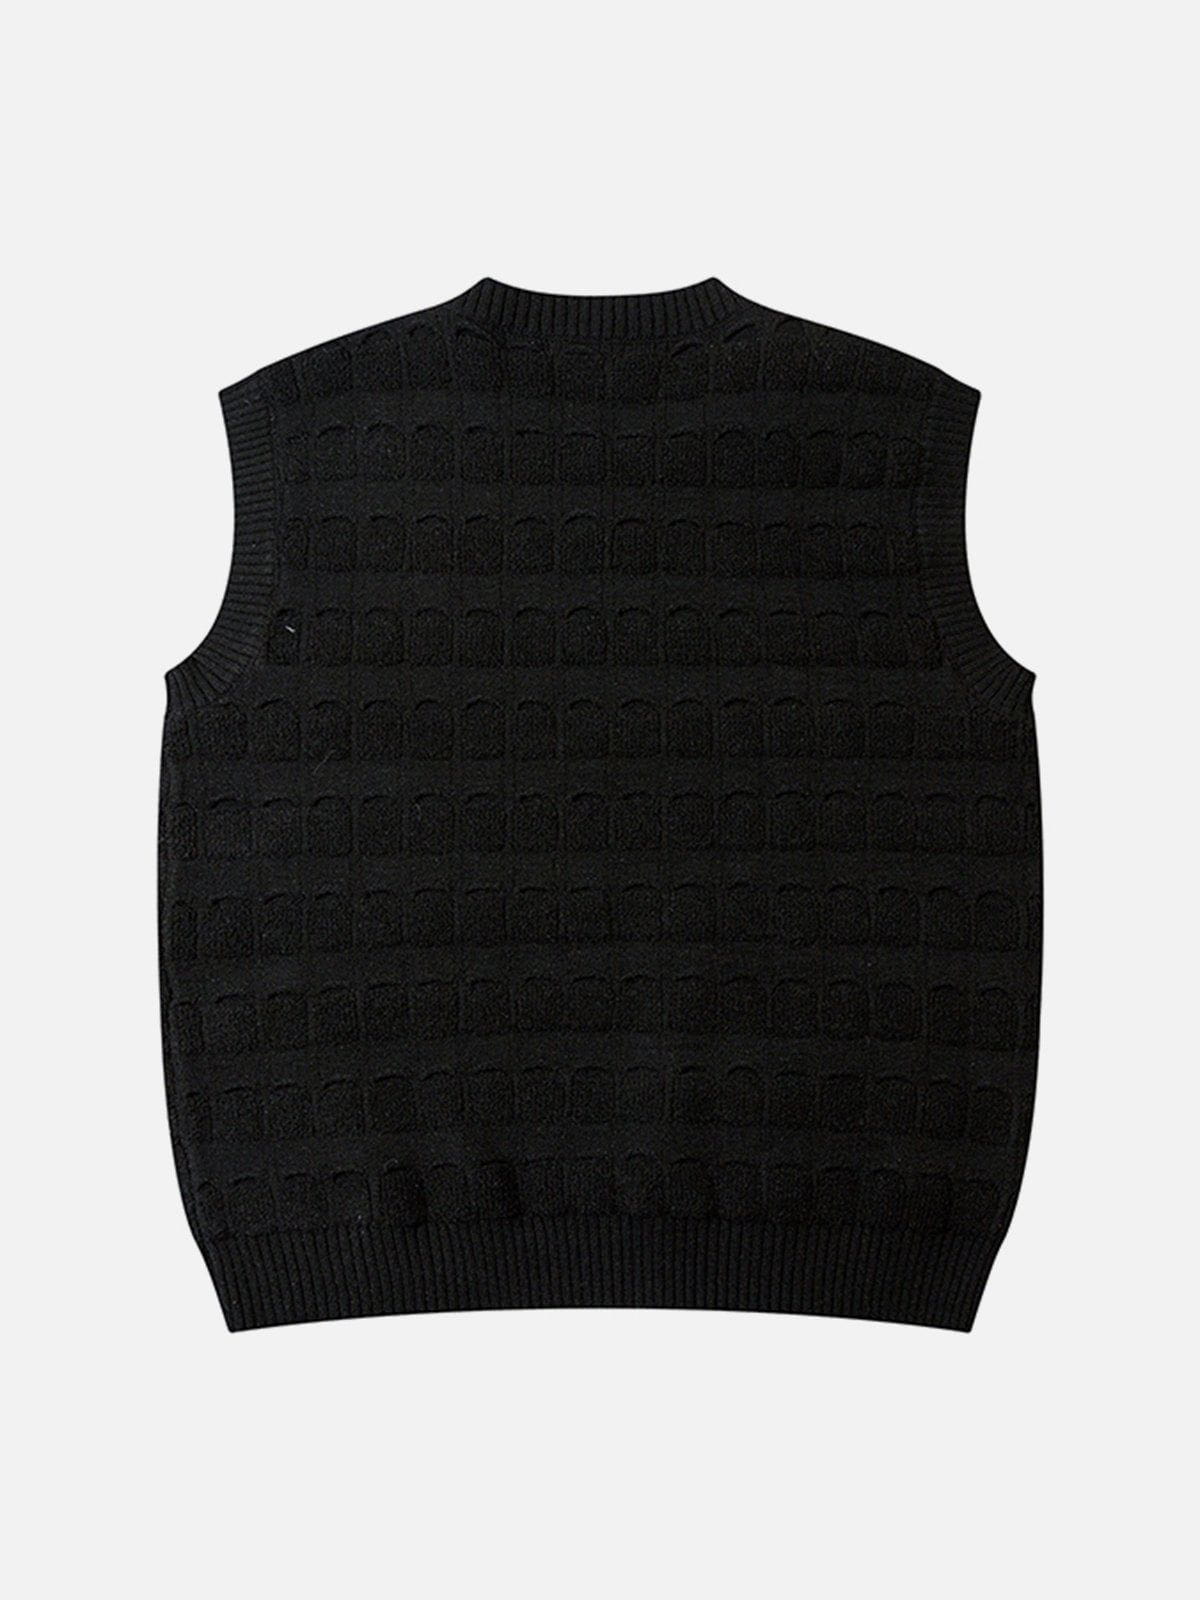 Majesda® - Solid Woven Stripe Sweater Vest outfit ideas streetwear fashion